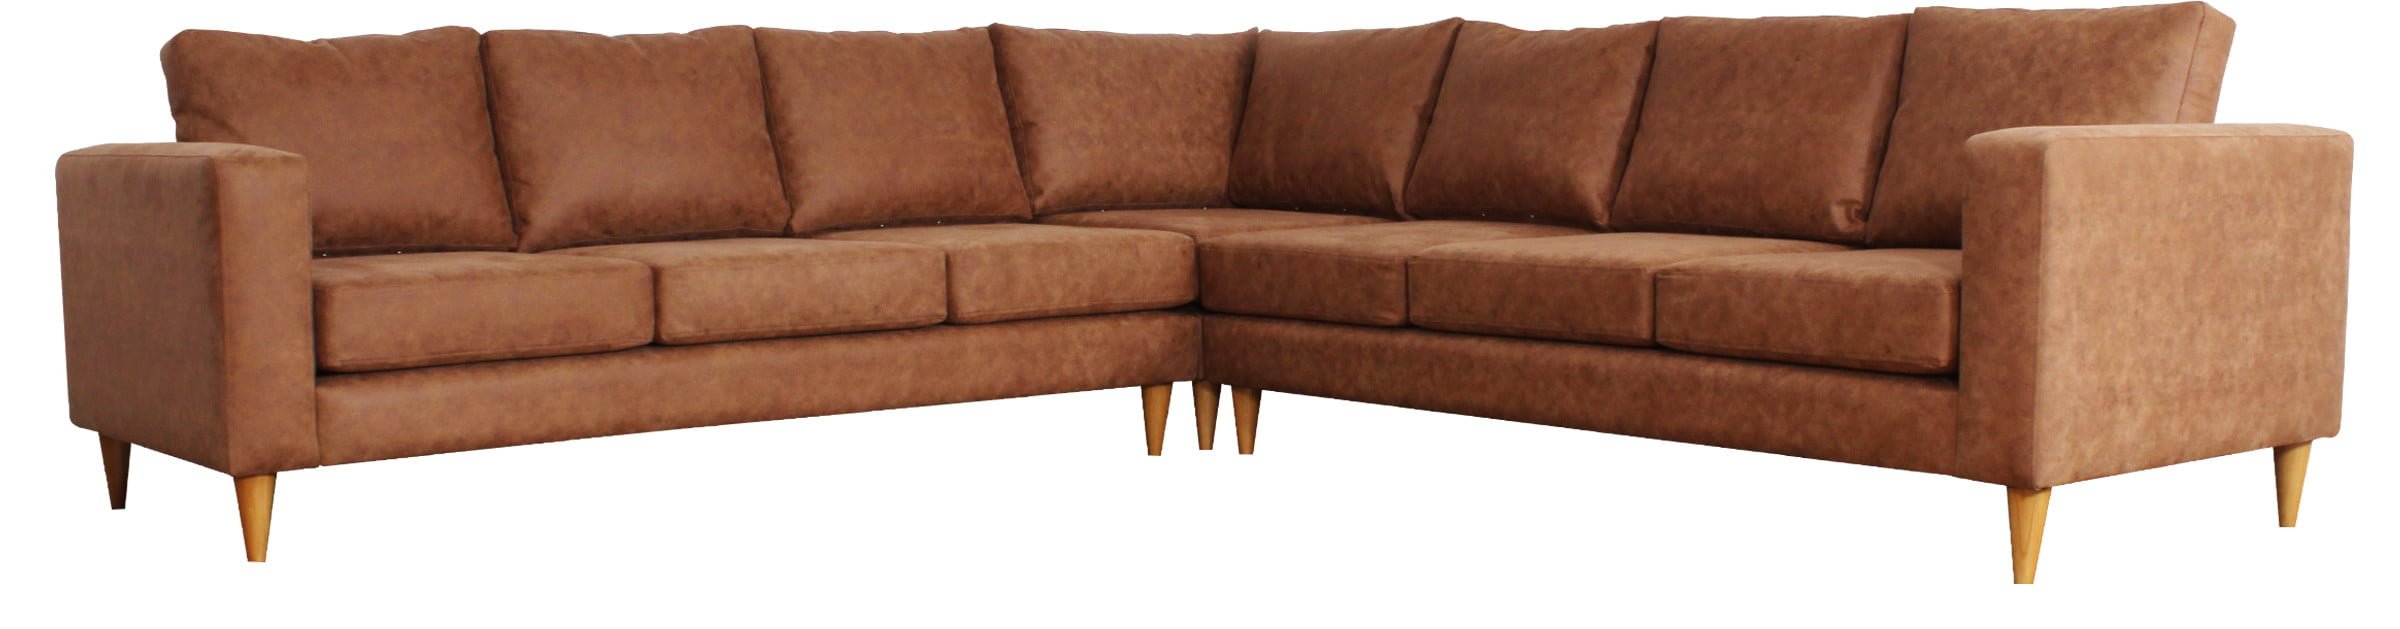 Sofa Modular Cuero Bonded 3 